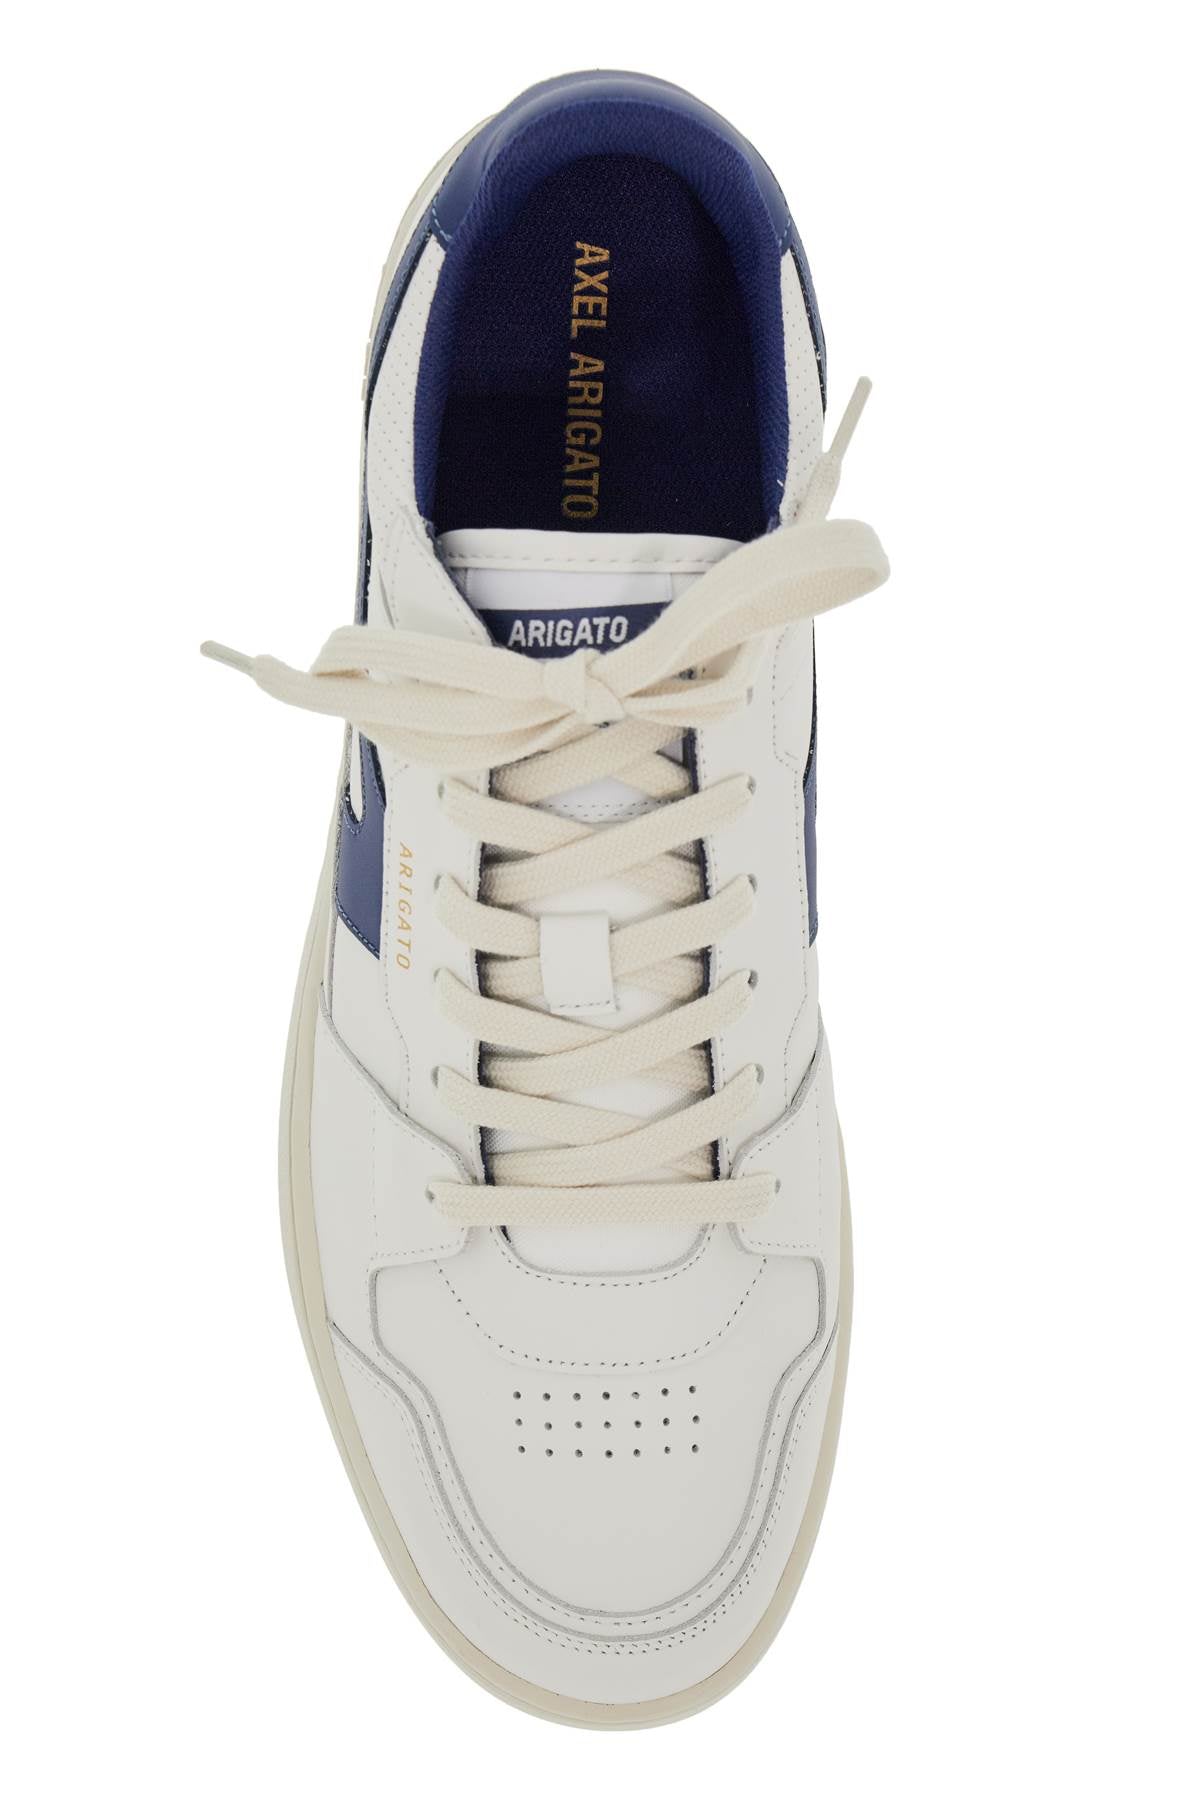 Axel Arigato Sneakers Dice   White